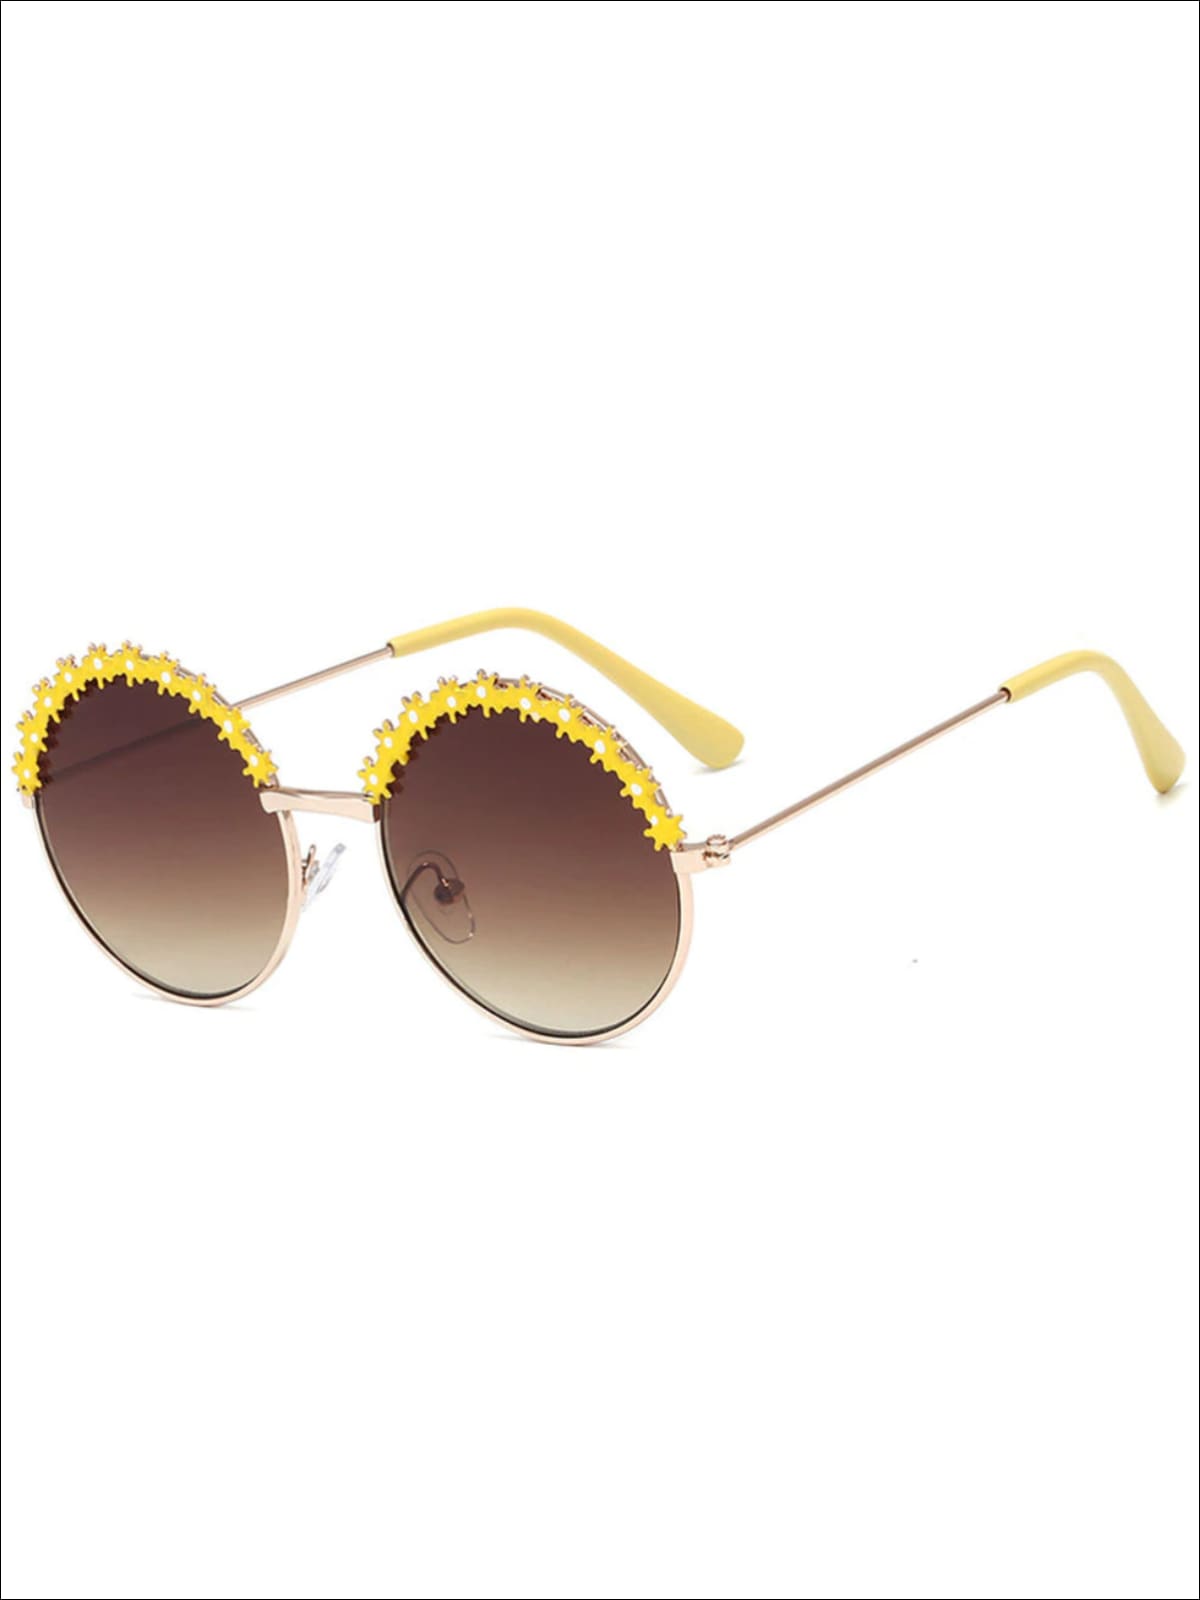 Girls Round Vintage Floral Sunglasses - Yellow - Girls Accessories